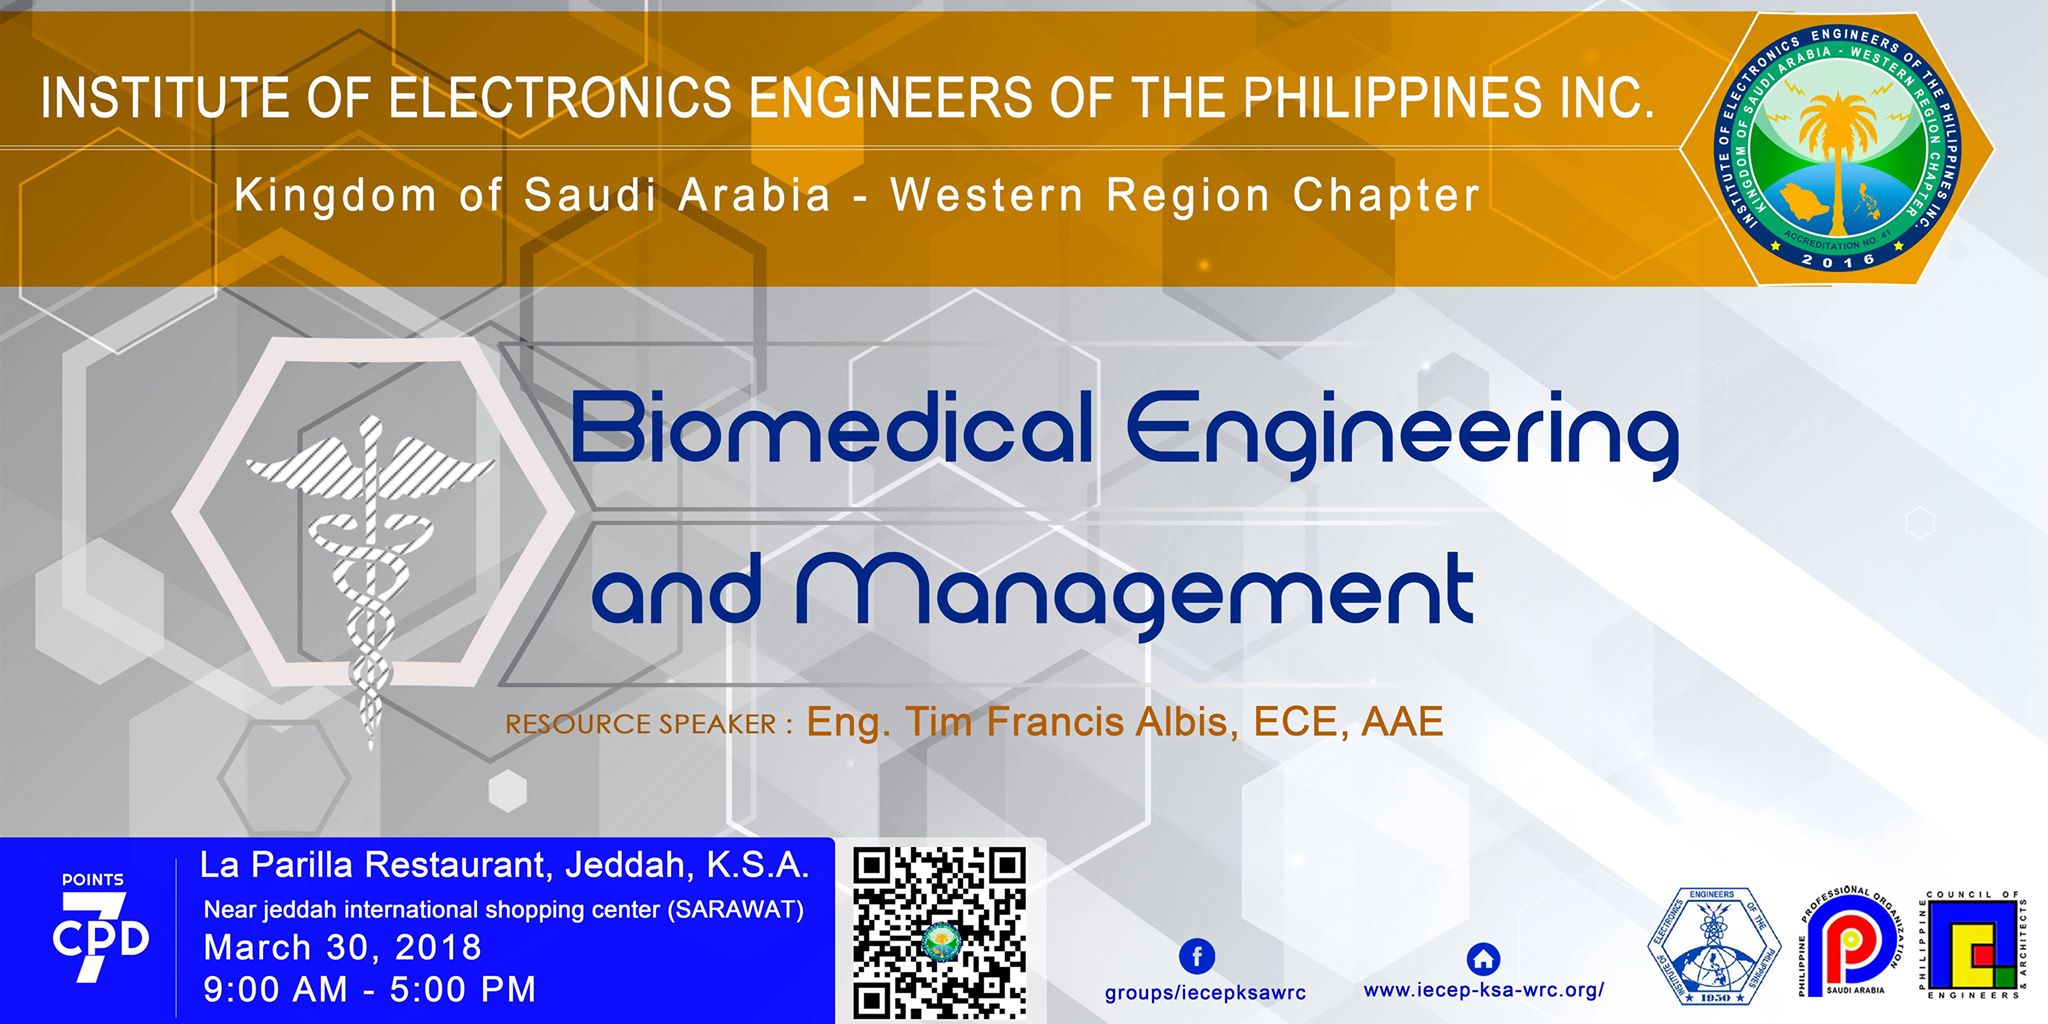 Biomedical Engineering and Management Seminar Registration